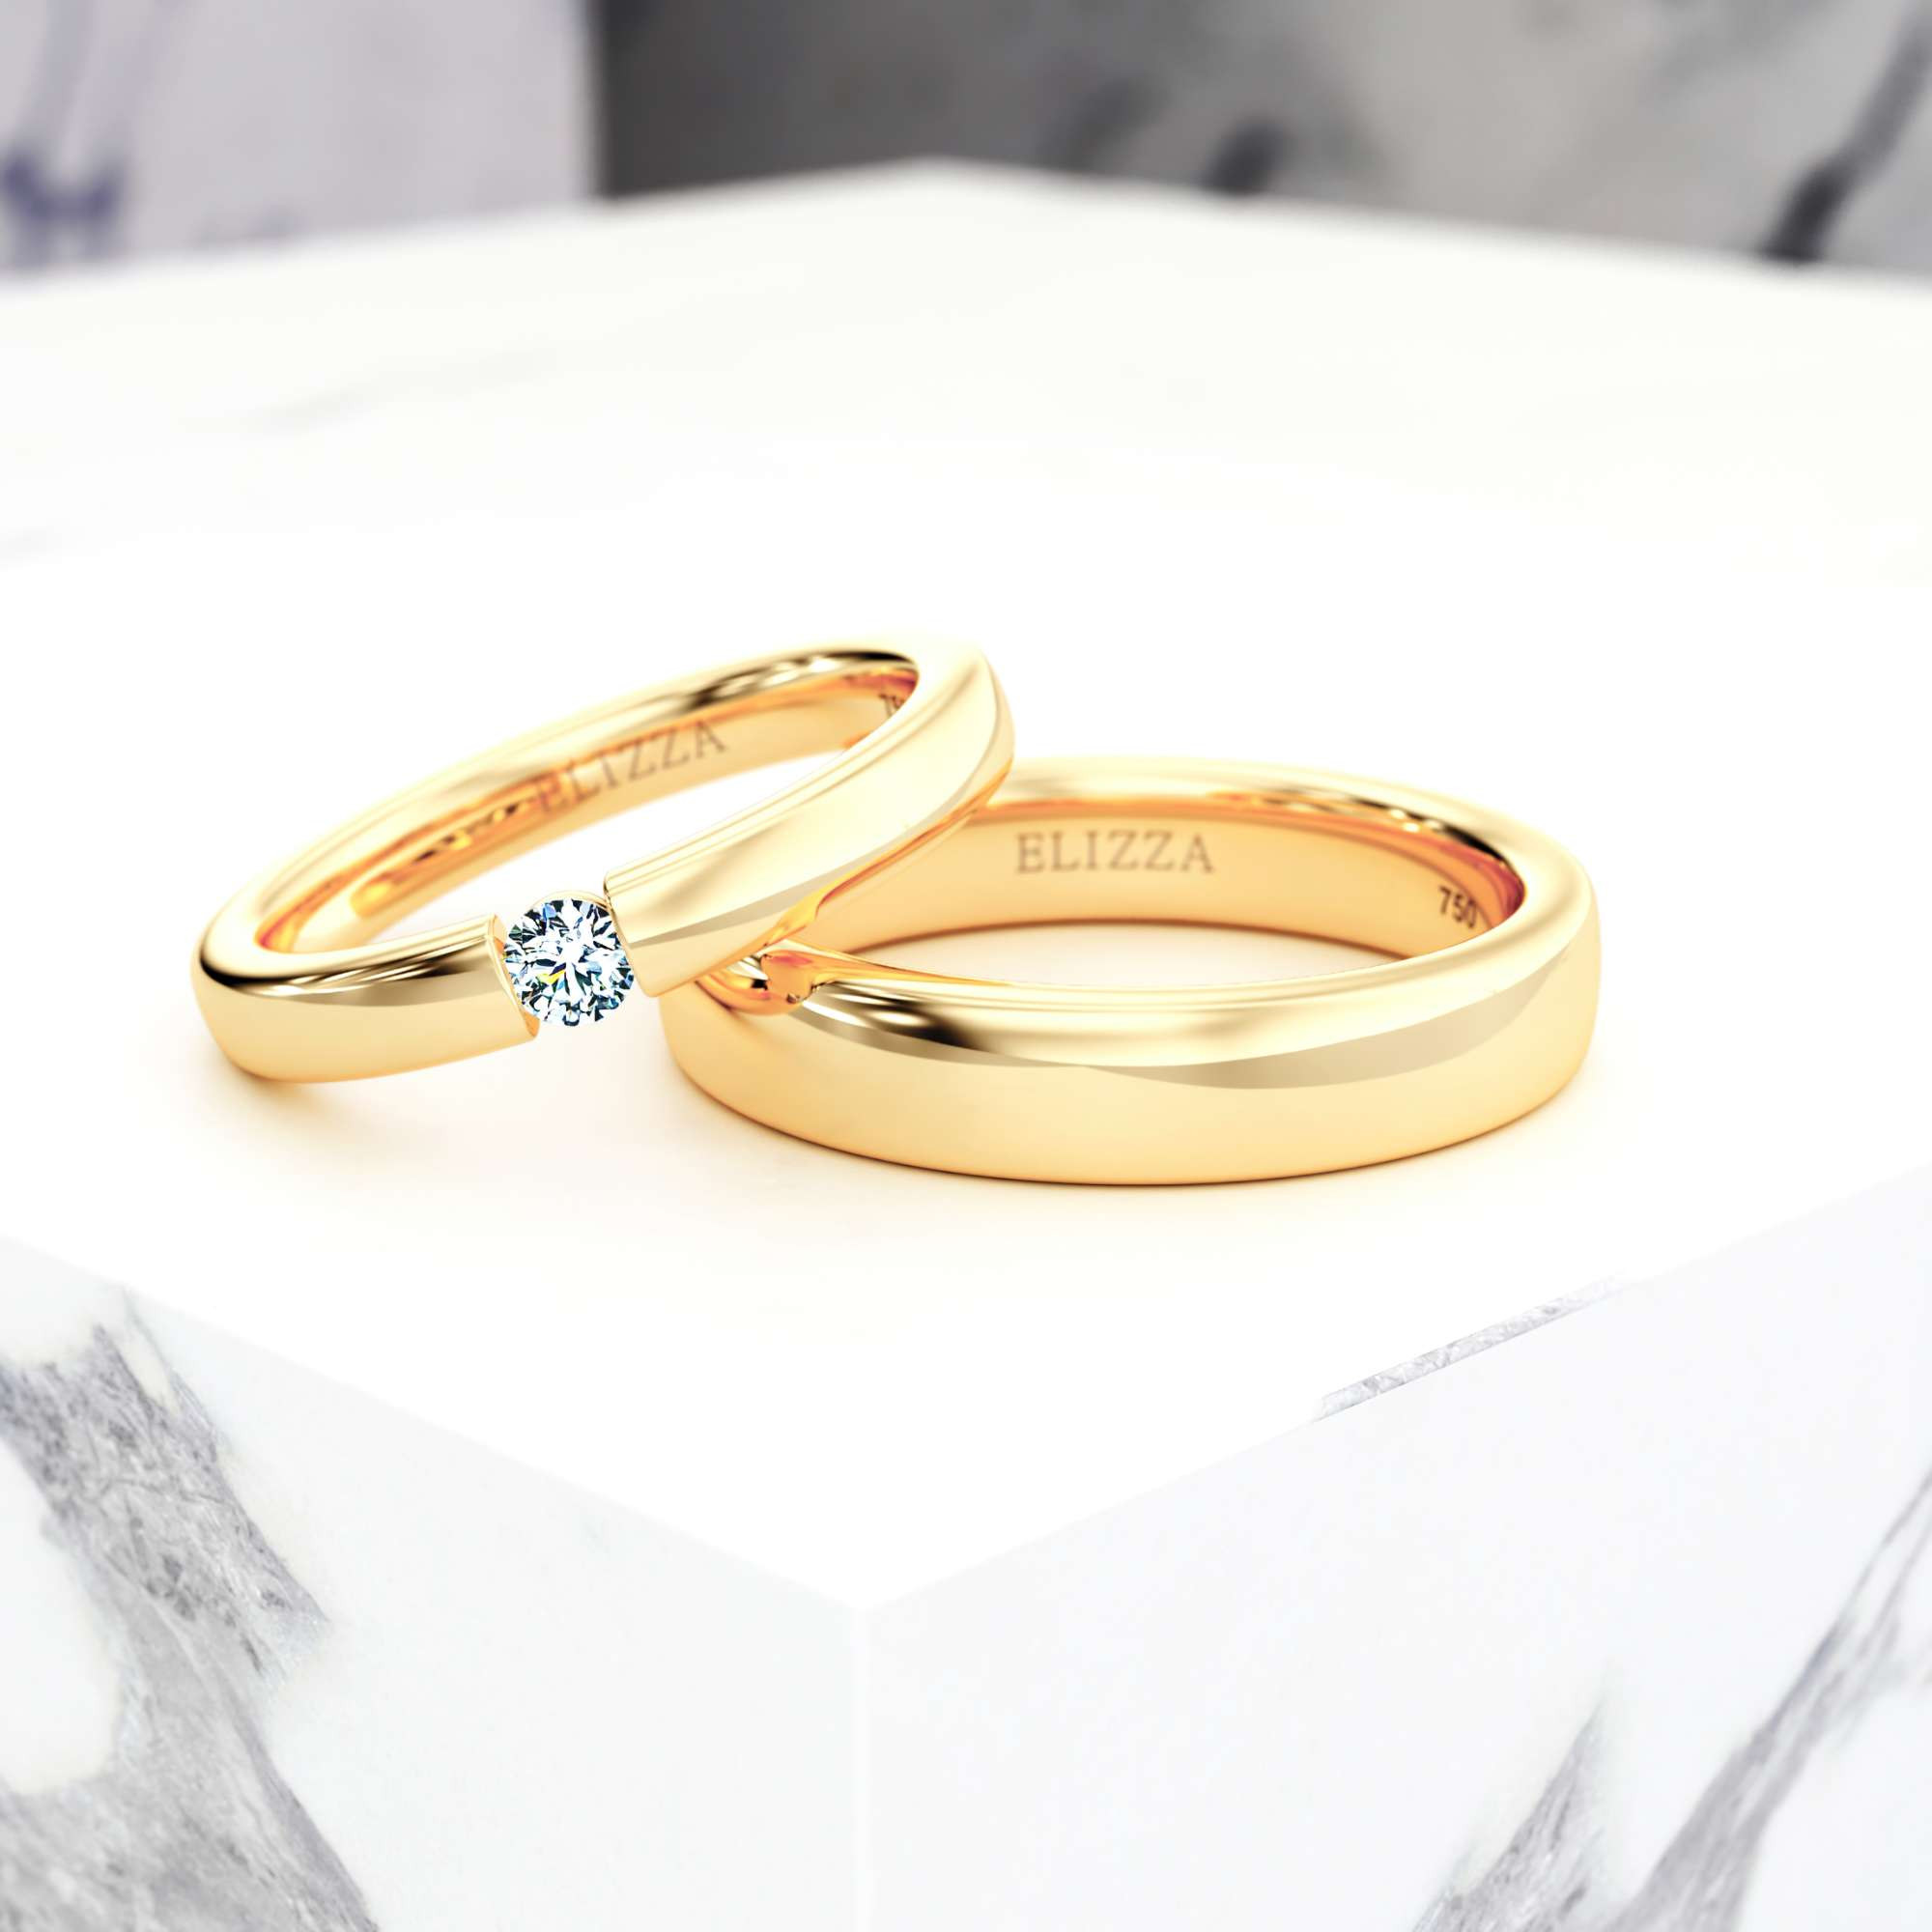 22K 916 Fine Yellow Gold Women's Marriage Bridal Ring Size 5.5”-6” 3.13 grm  | eBay